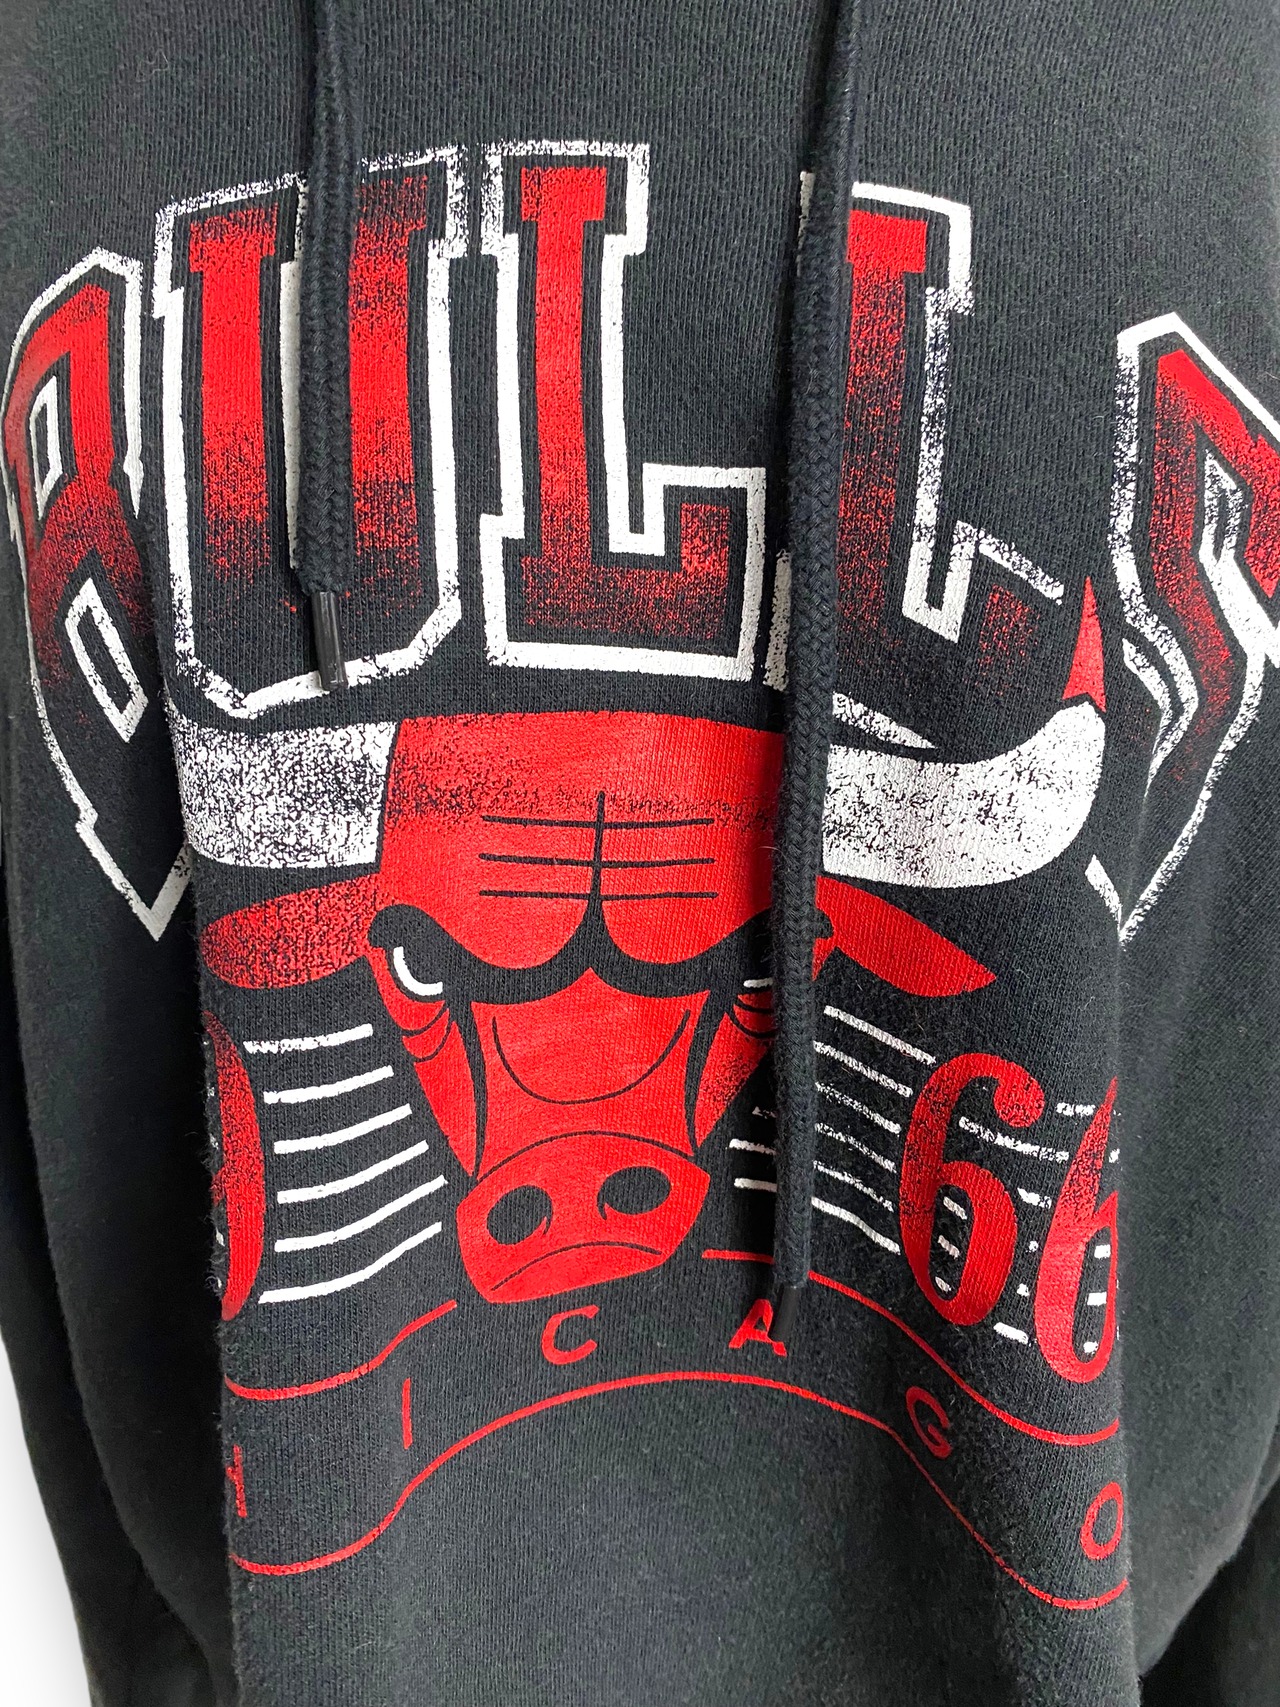 Bulls CHICAGO cutting hoodie